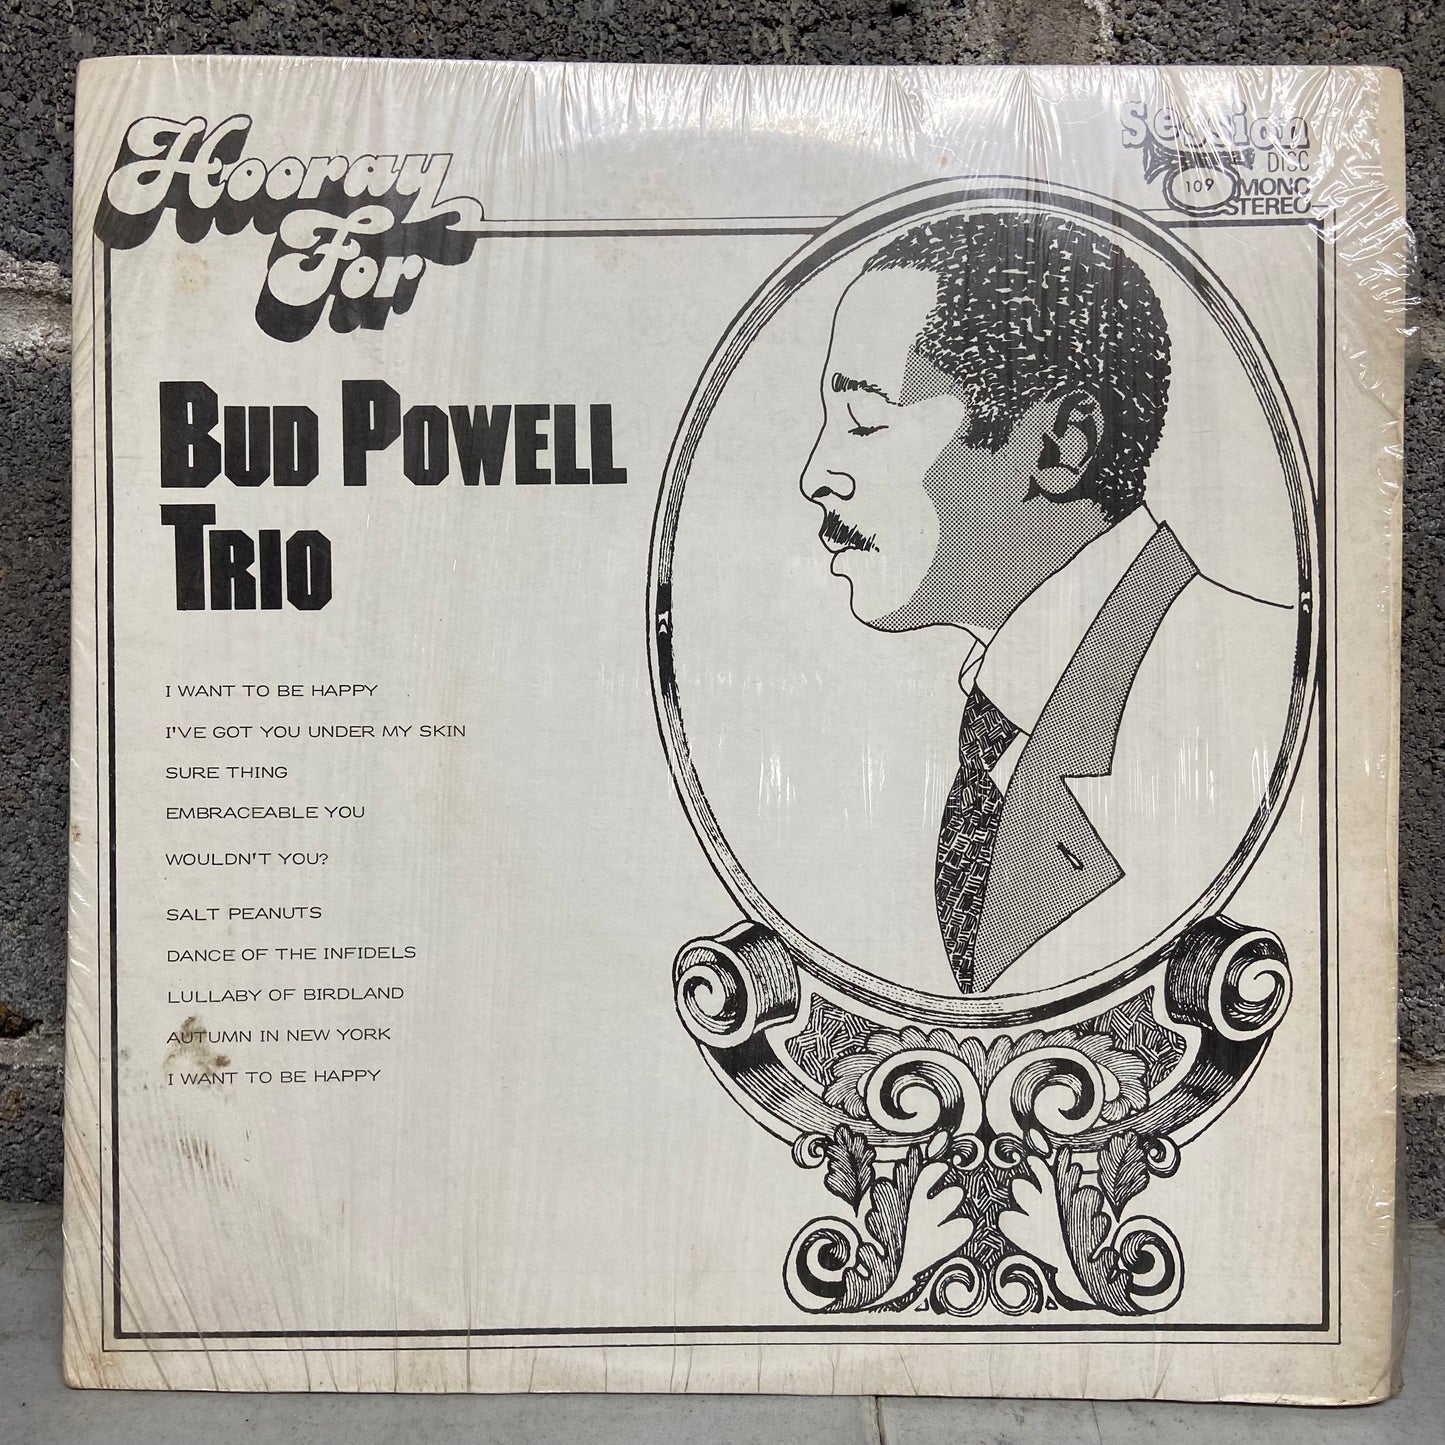 Hooray for Bud Powell Trio